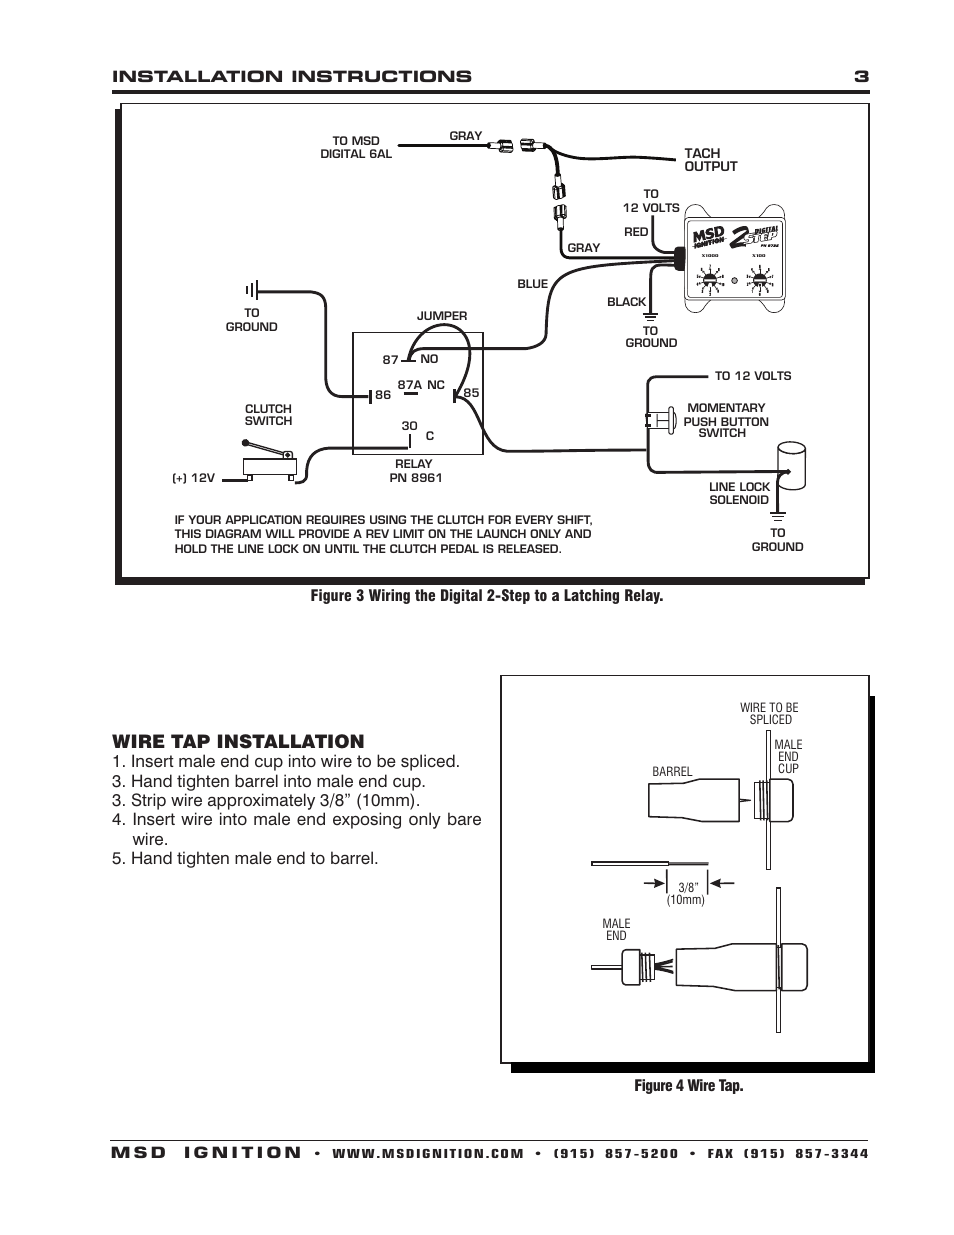 Wire tap installation | MSD 8732 2-Step Rev Control for Digital 6AL